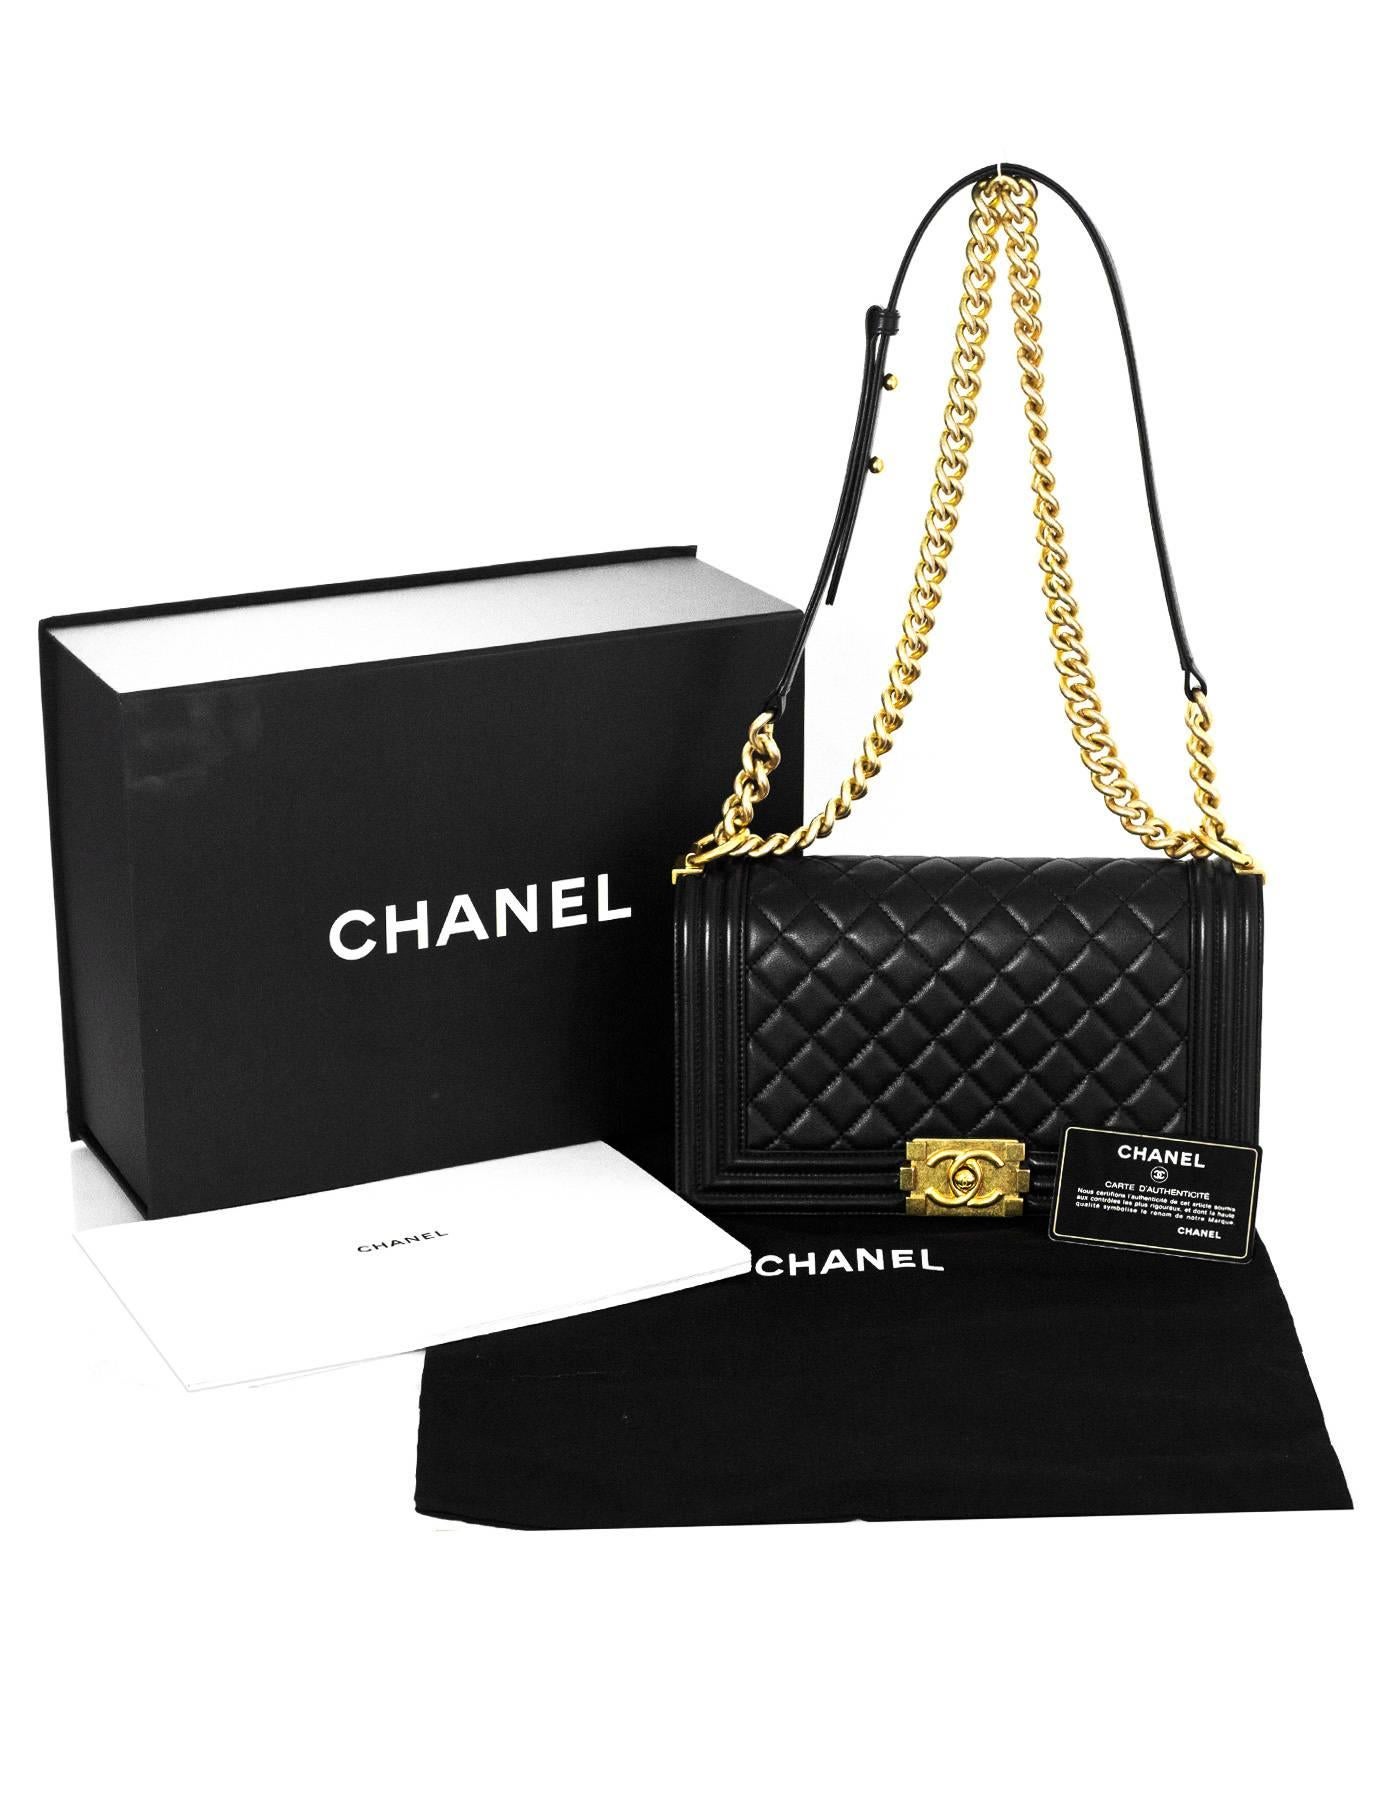 Chanel Black Lambskin Leather Old Medium Boy Bag with GHW 1